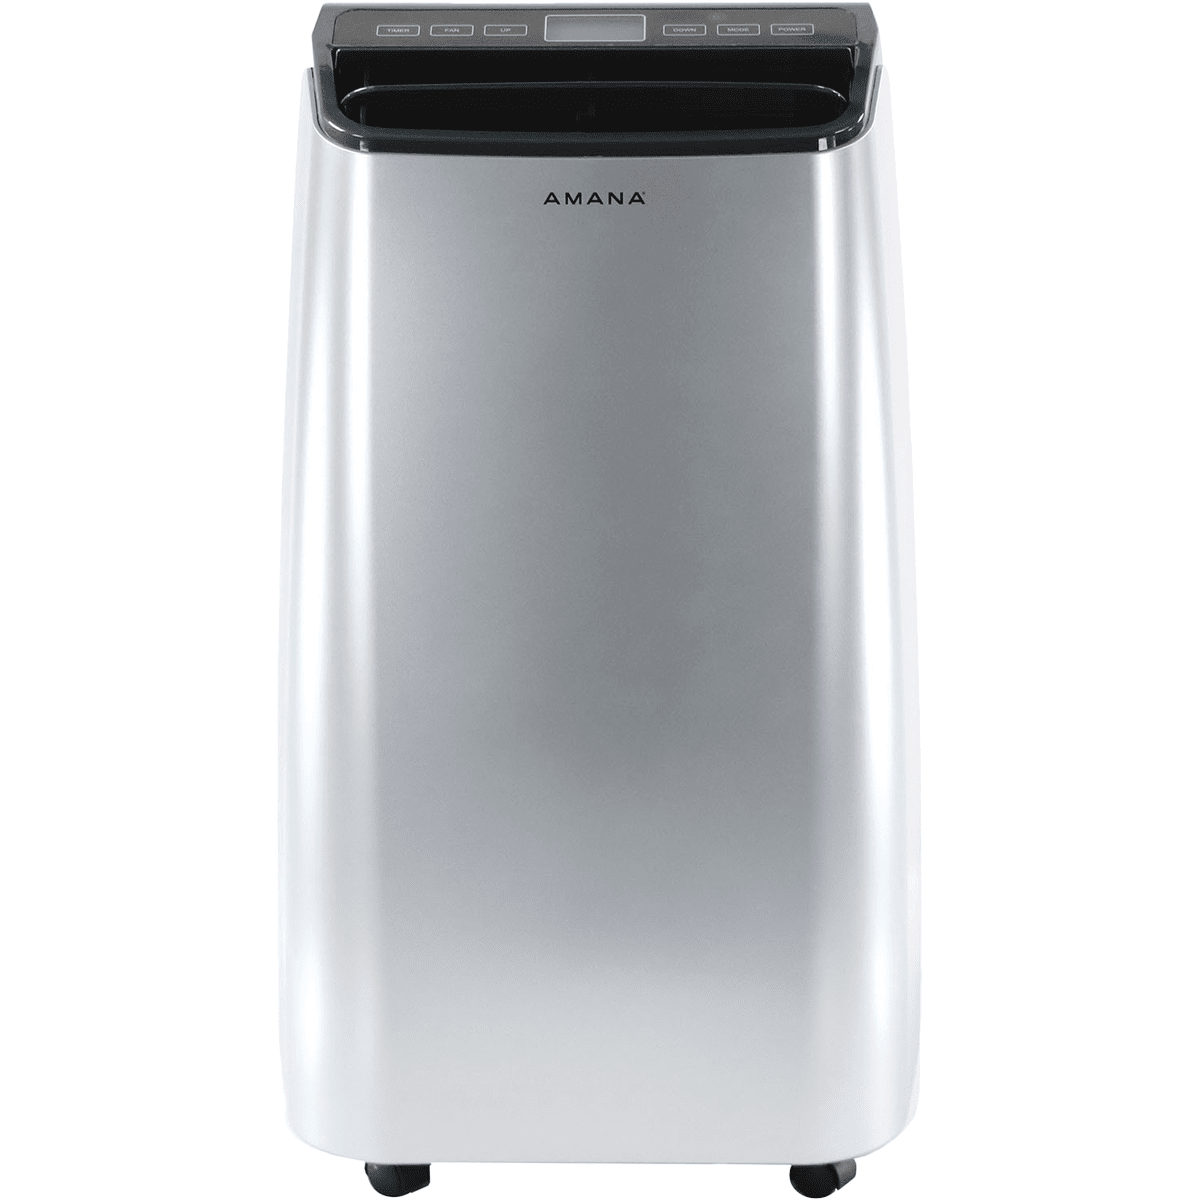 Amana 12,000 BTU Portable Air Conditioner-Silver